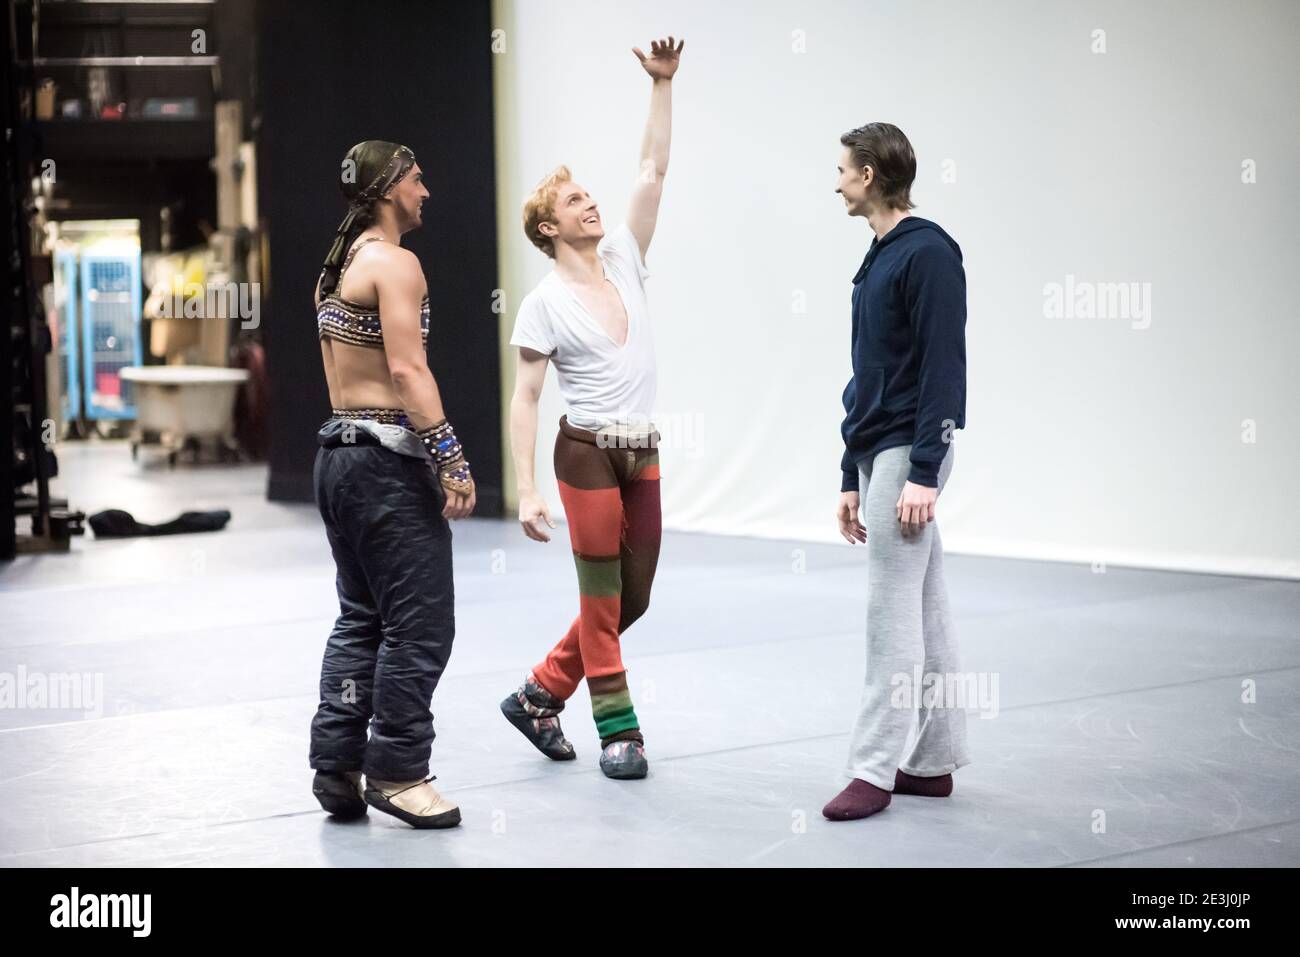 Three male ballet stars Ivan Vasiliev, Steven McRae and Vadim Muntagirov discuss ballet on stage before a gala performance Stock Photo